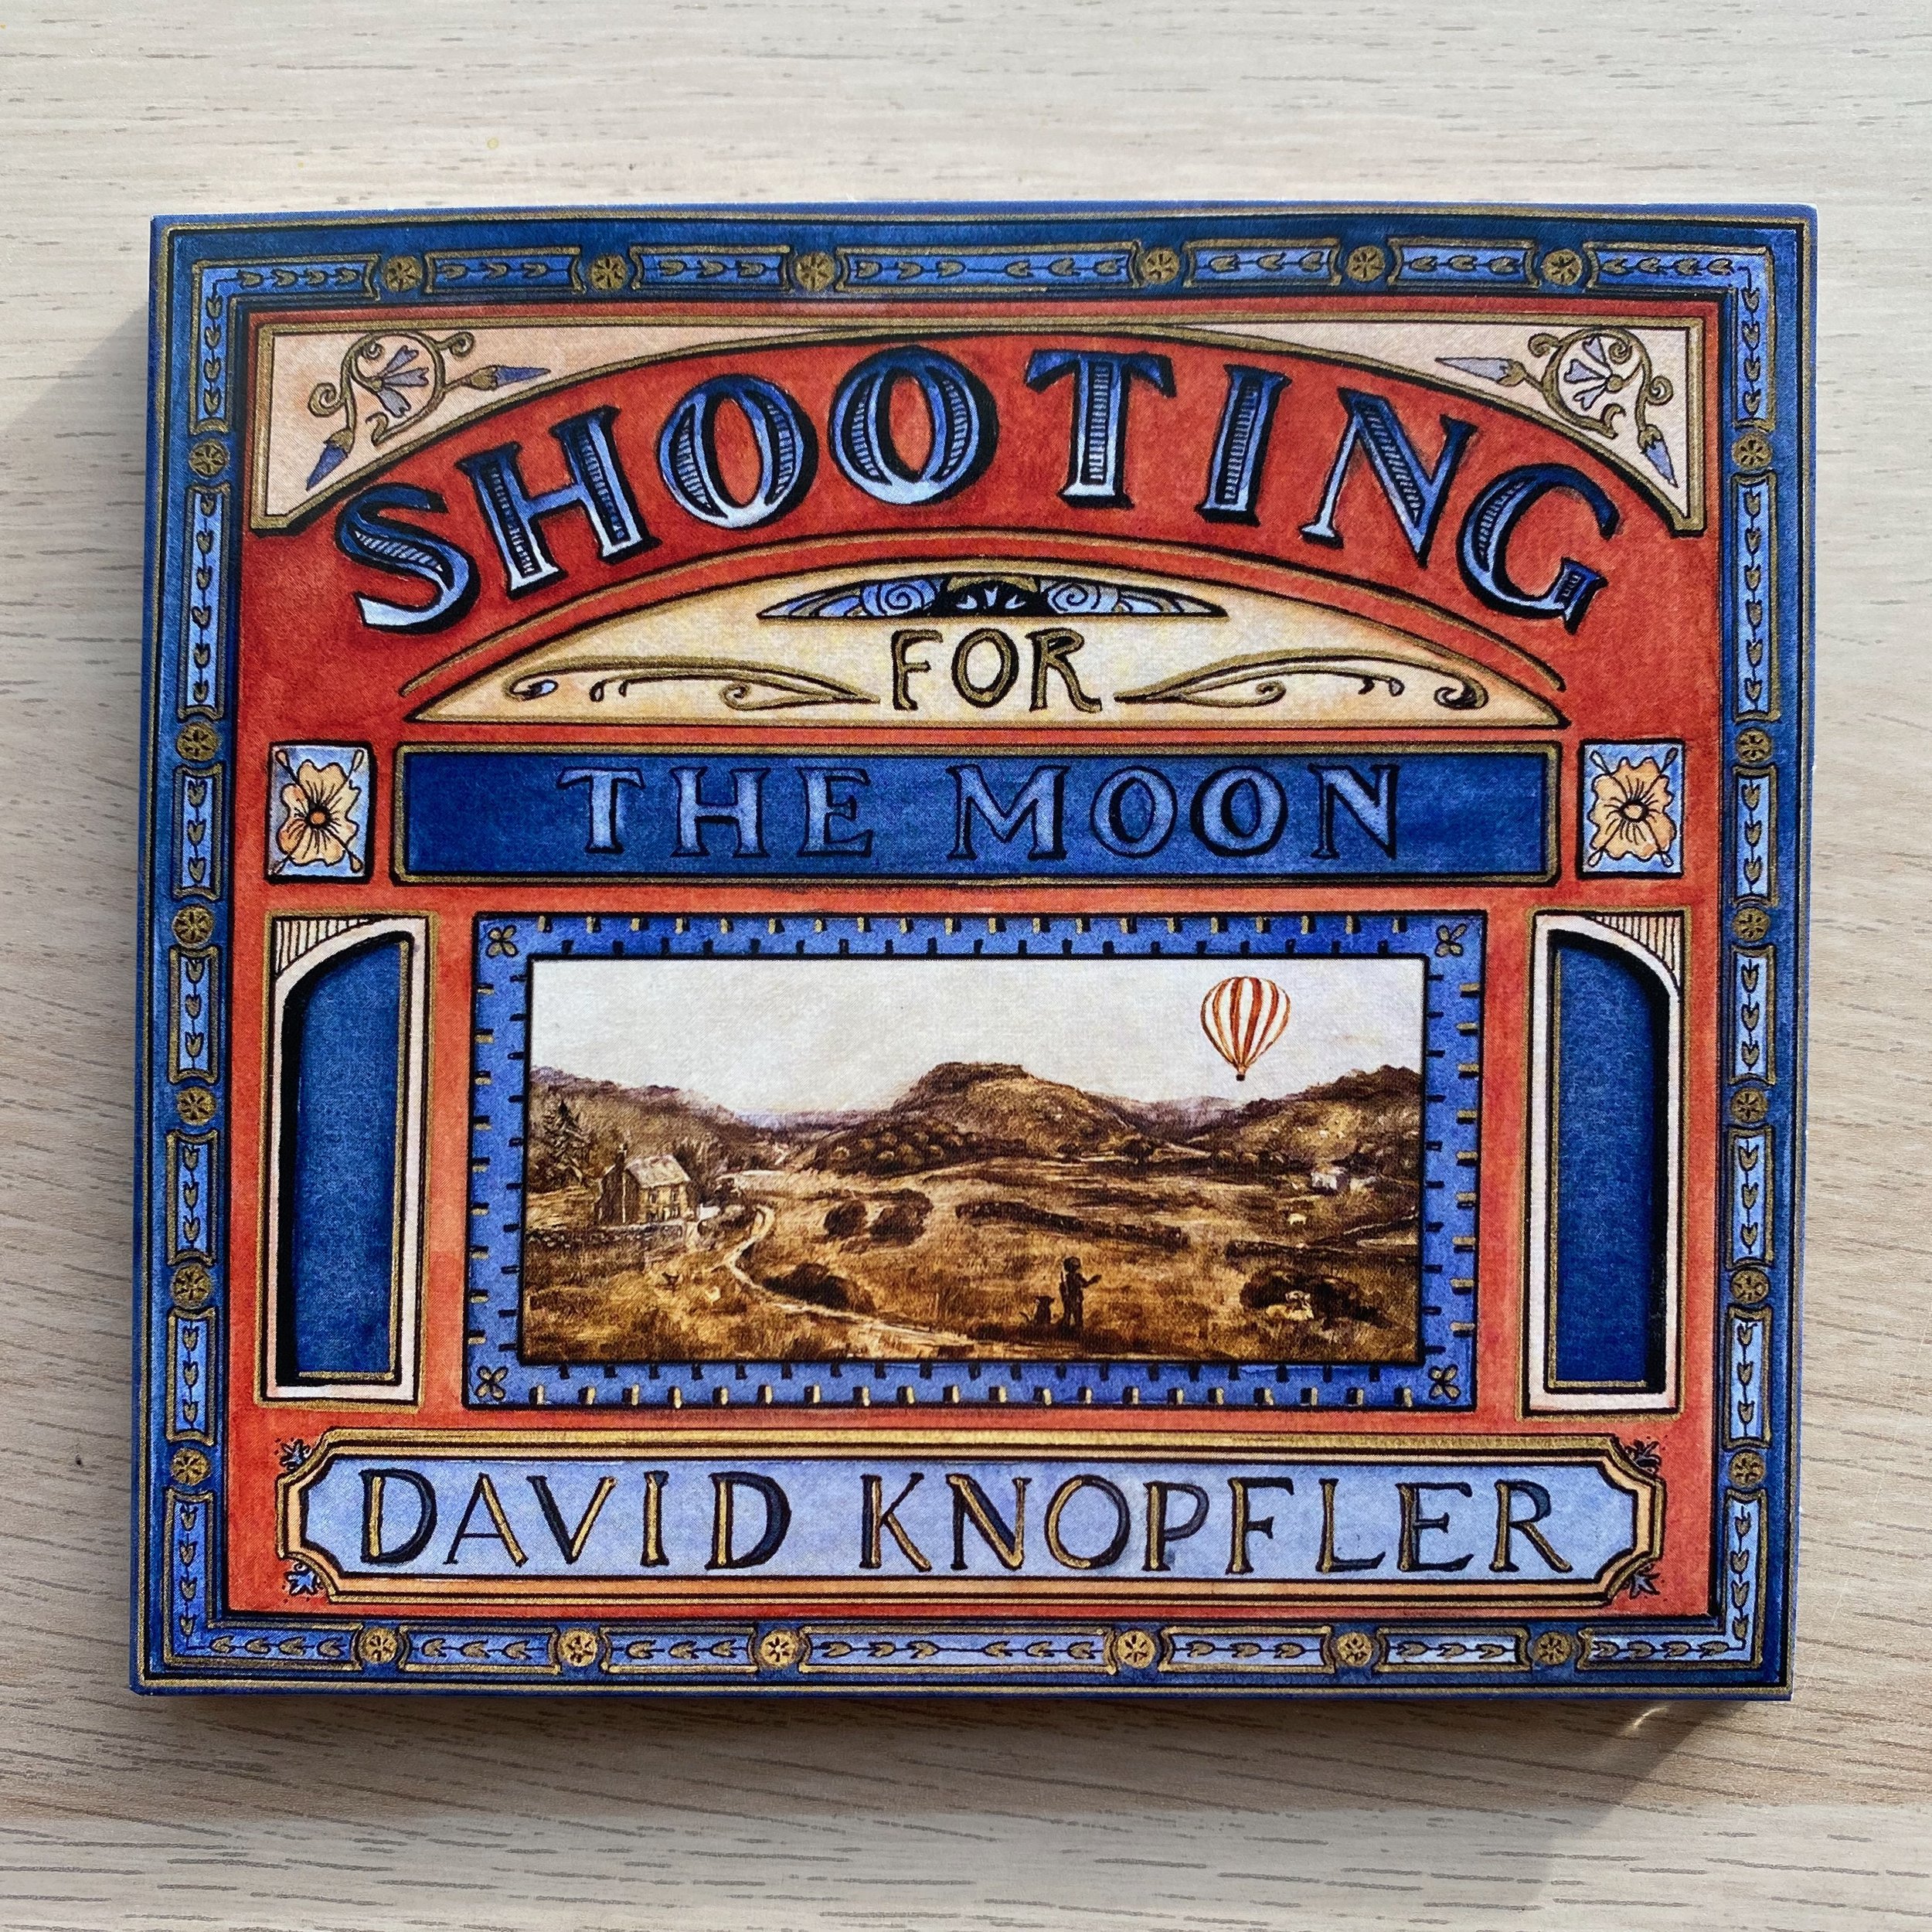 David knopfler shooting for the moon 2021 spb221j1